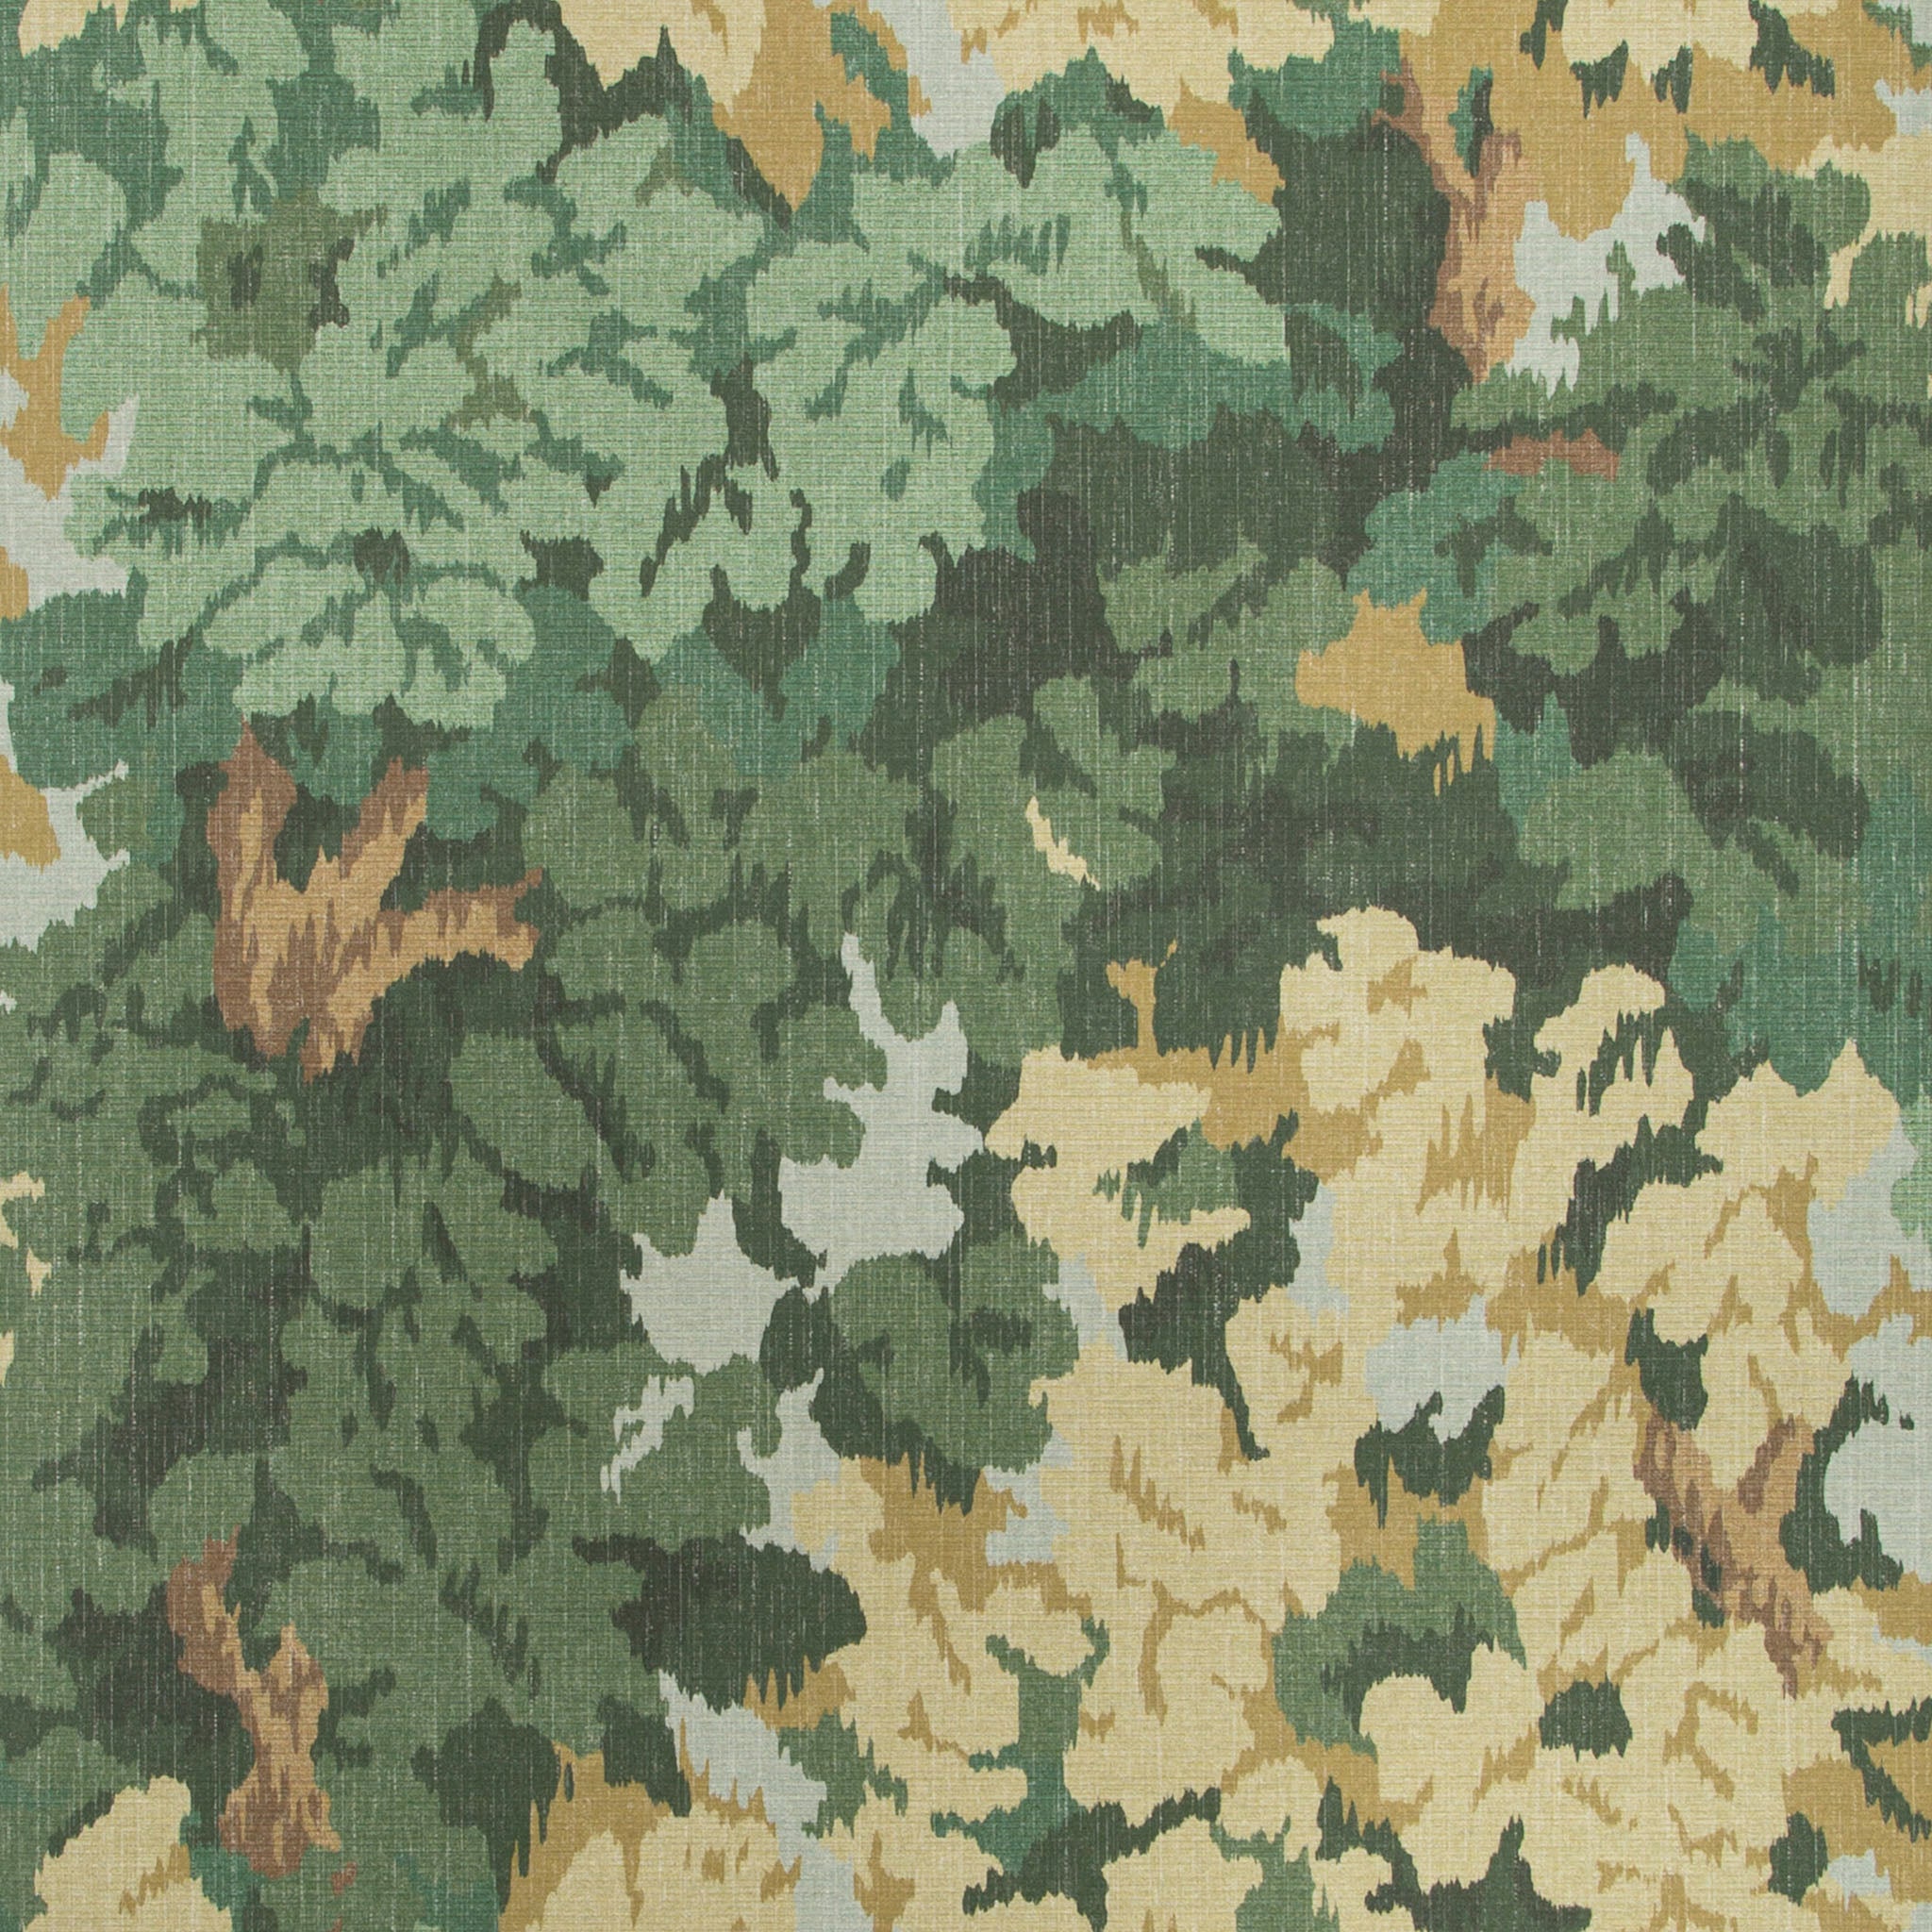 Taiga Forest Wallpaper, 11 yard roll